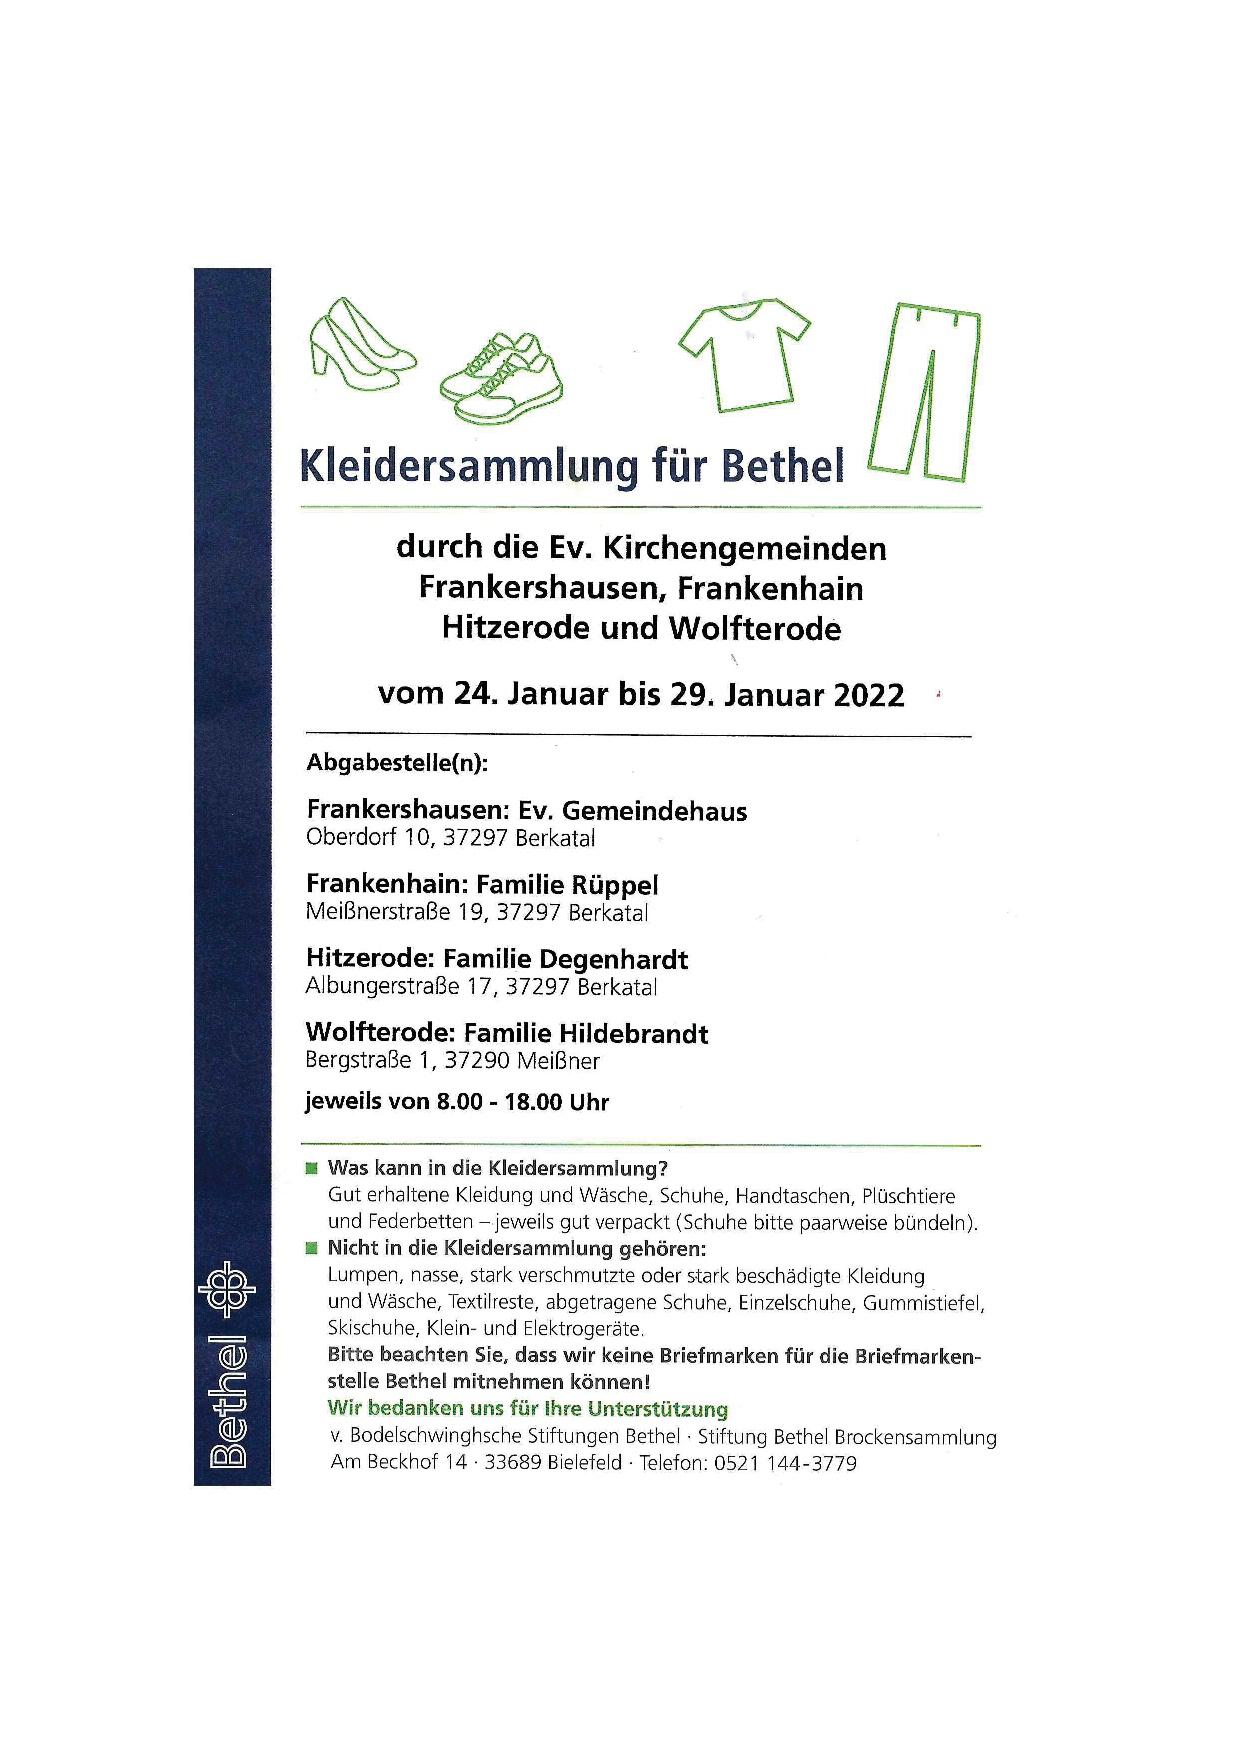 Kleiderspendensammlung Bethel 24.-29. Januar 2022